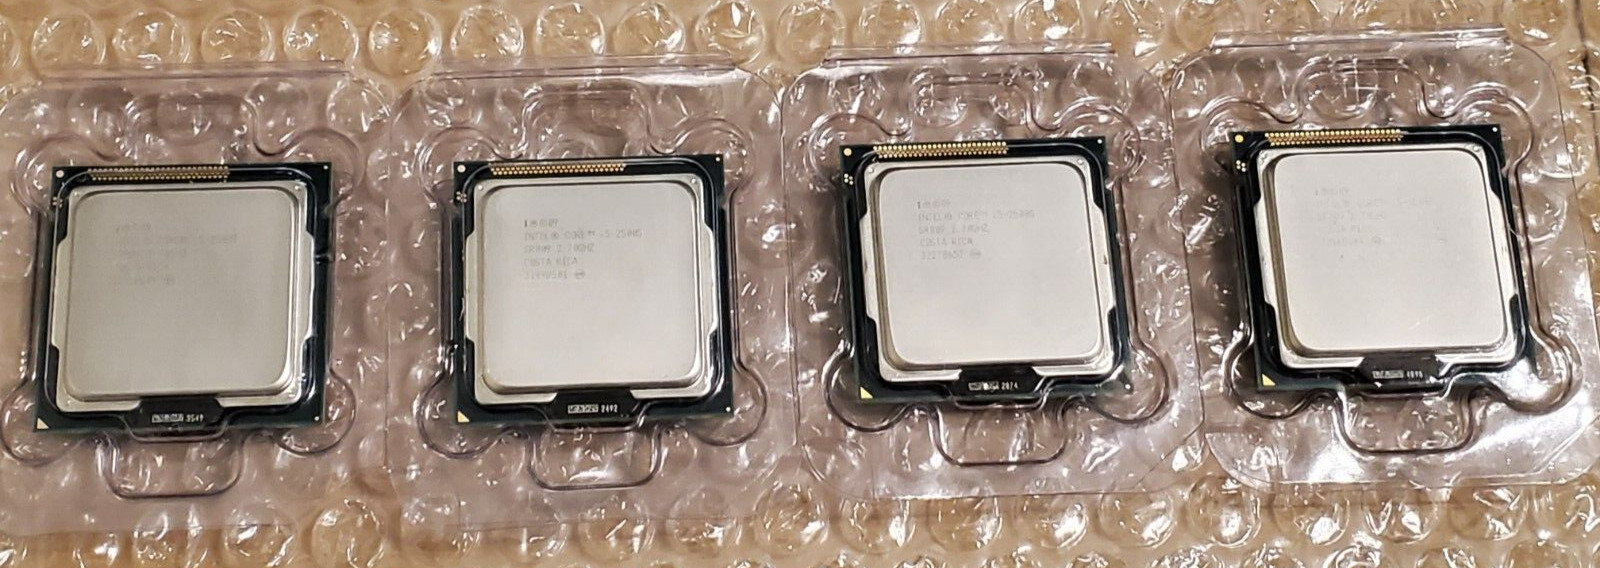 Intel Core i5-2500S 2.7GHz Quad Core Socket LGA 1155 CPU SR009 LOT of 4